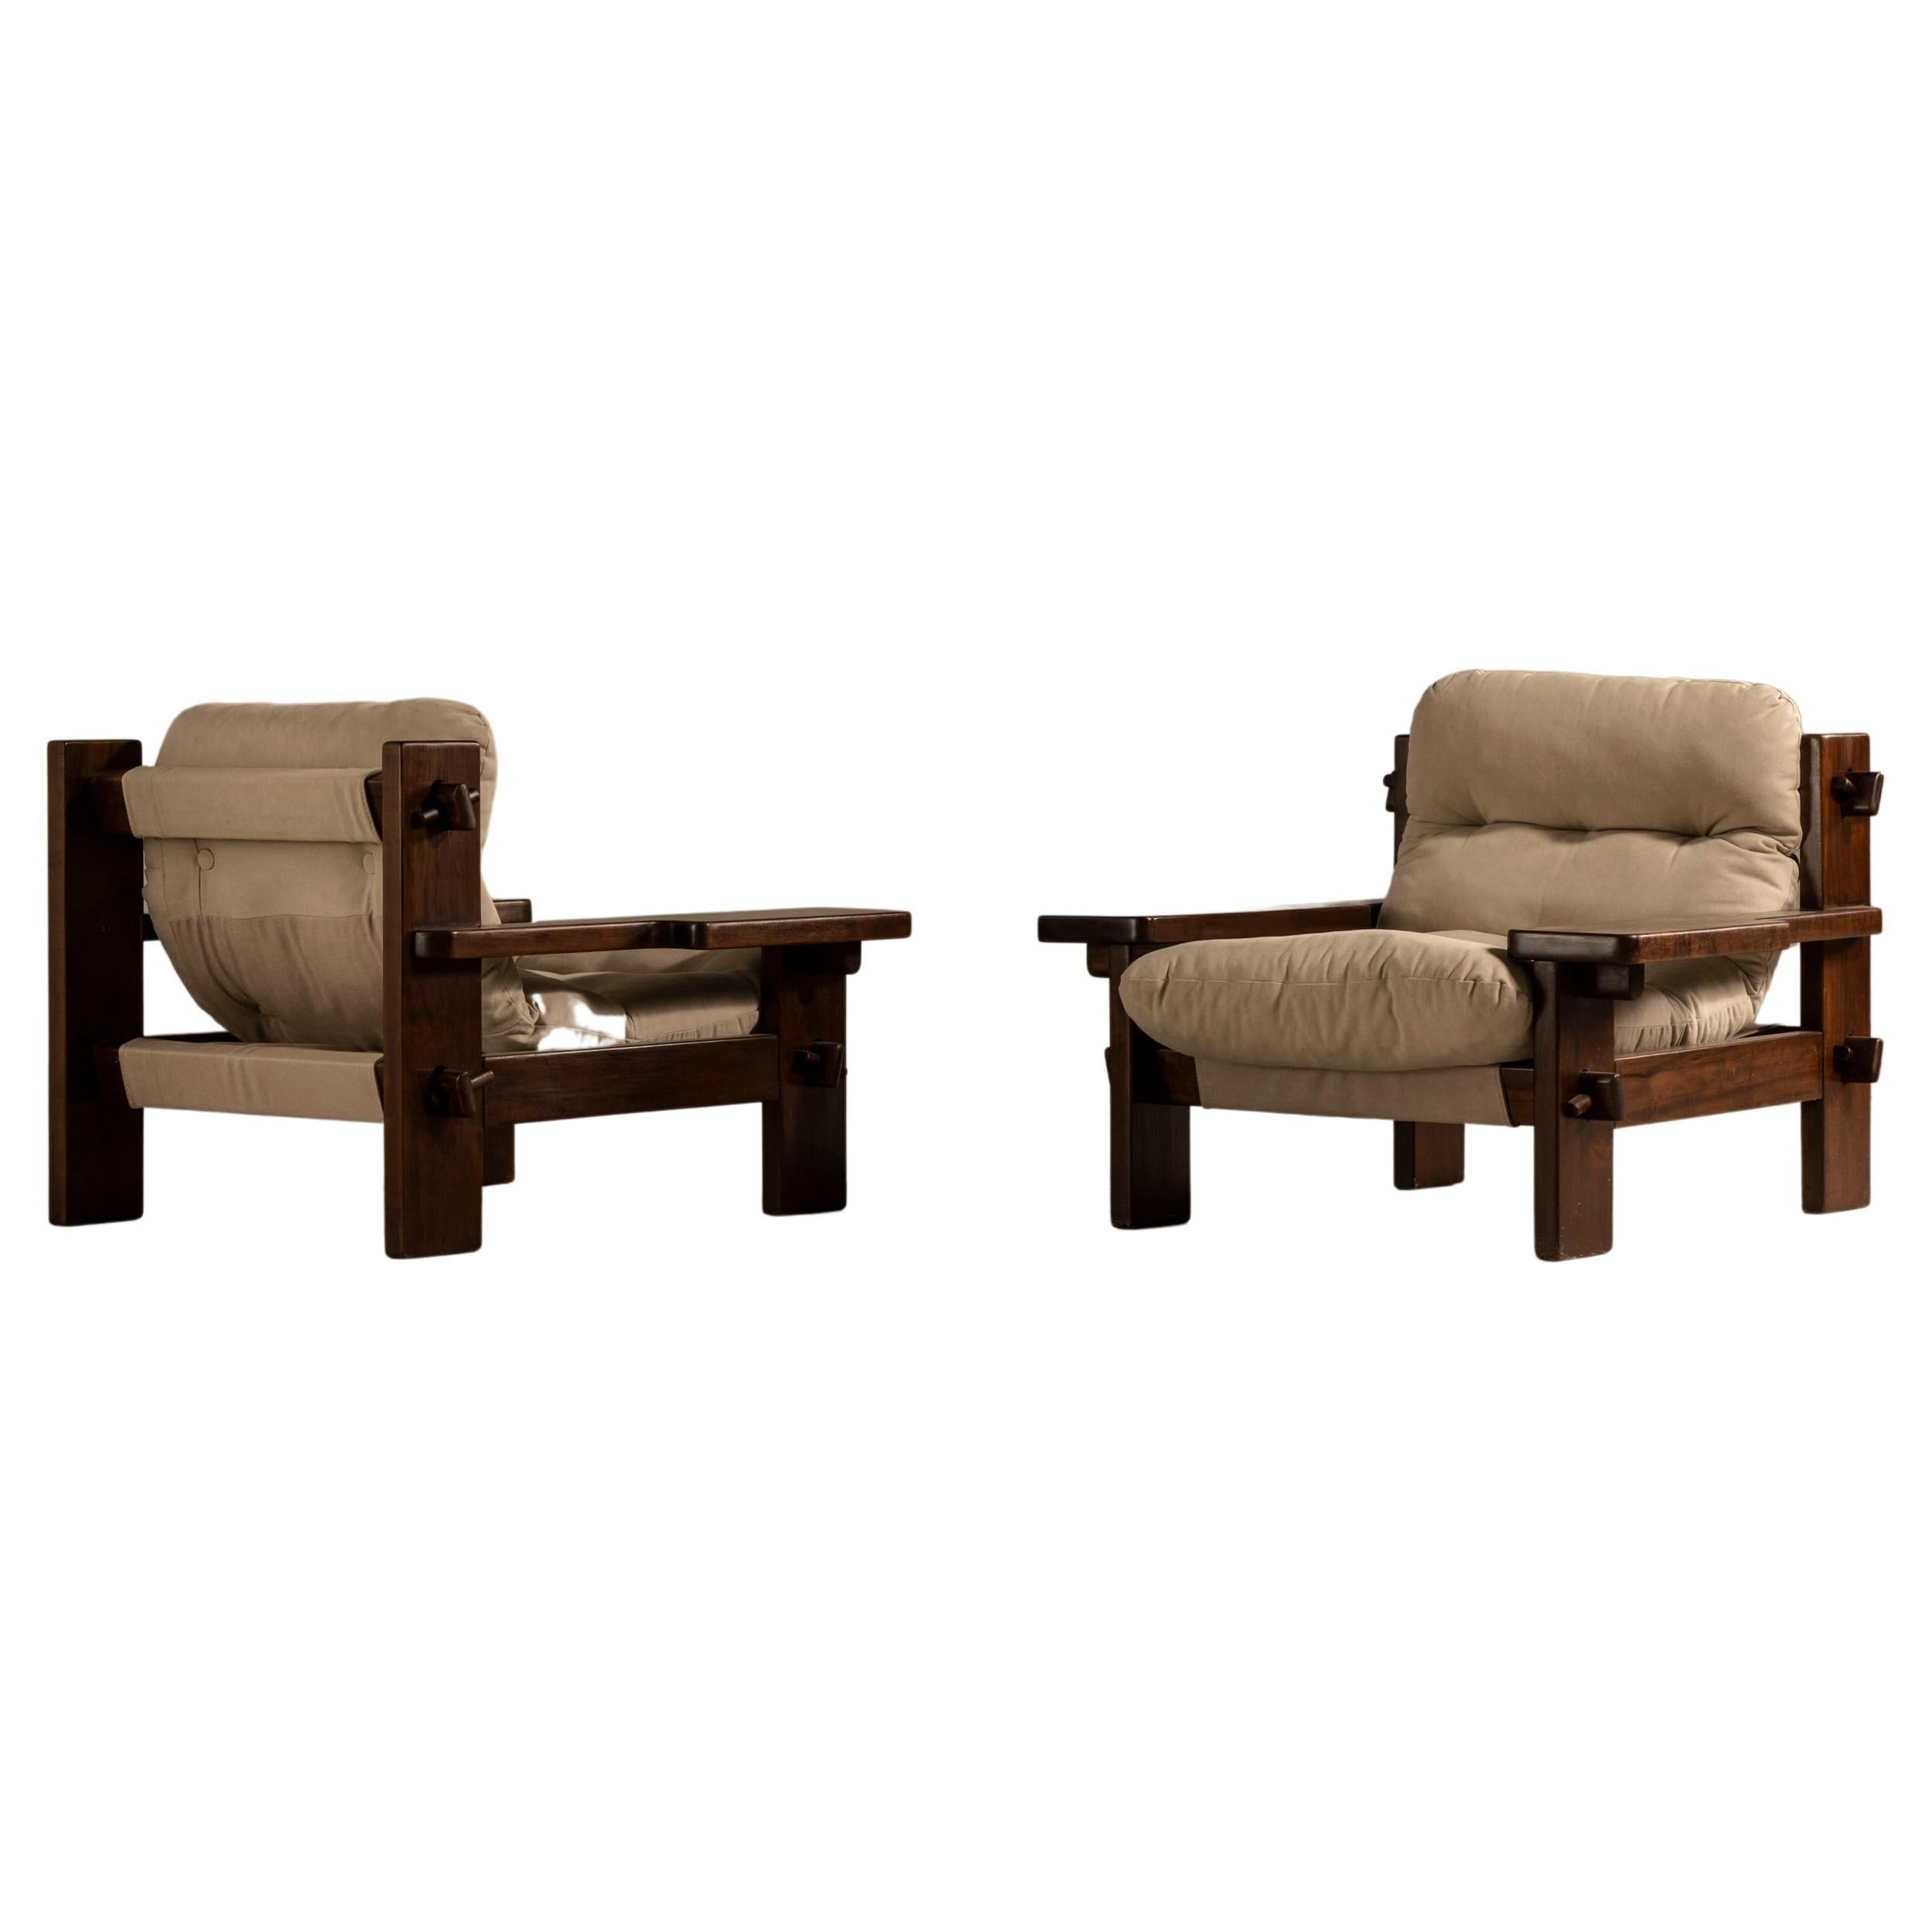 Lounge Chairs by Jean Gillon in Hardwood, Brazilian Midcentury Modern Design